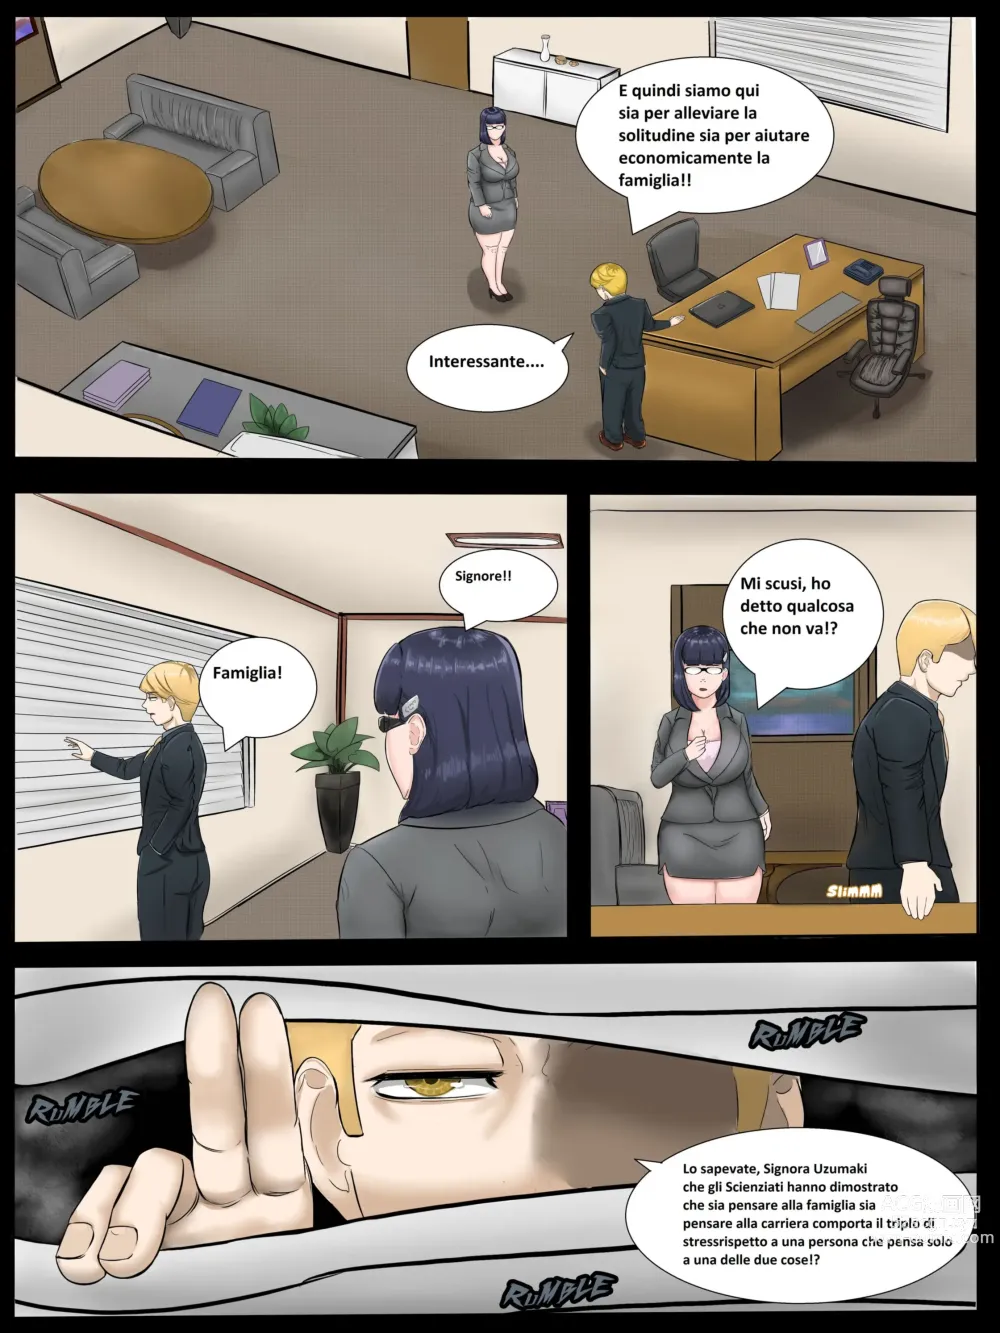 Page 8 of doujinshi Hinata trova lavoro